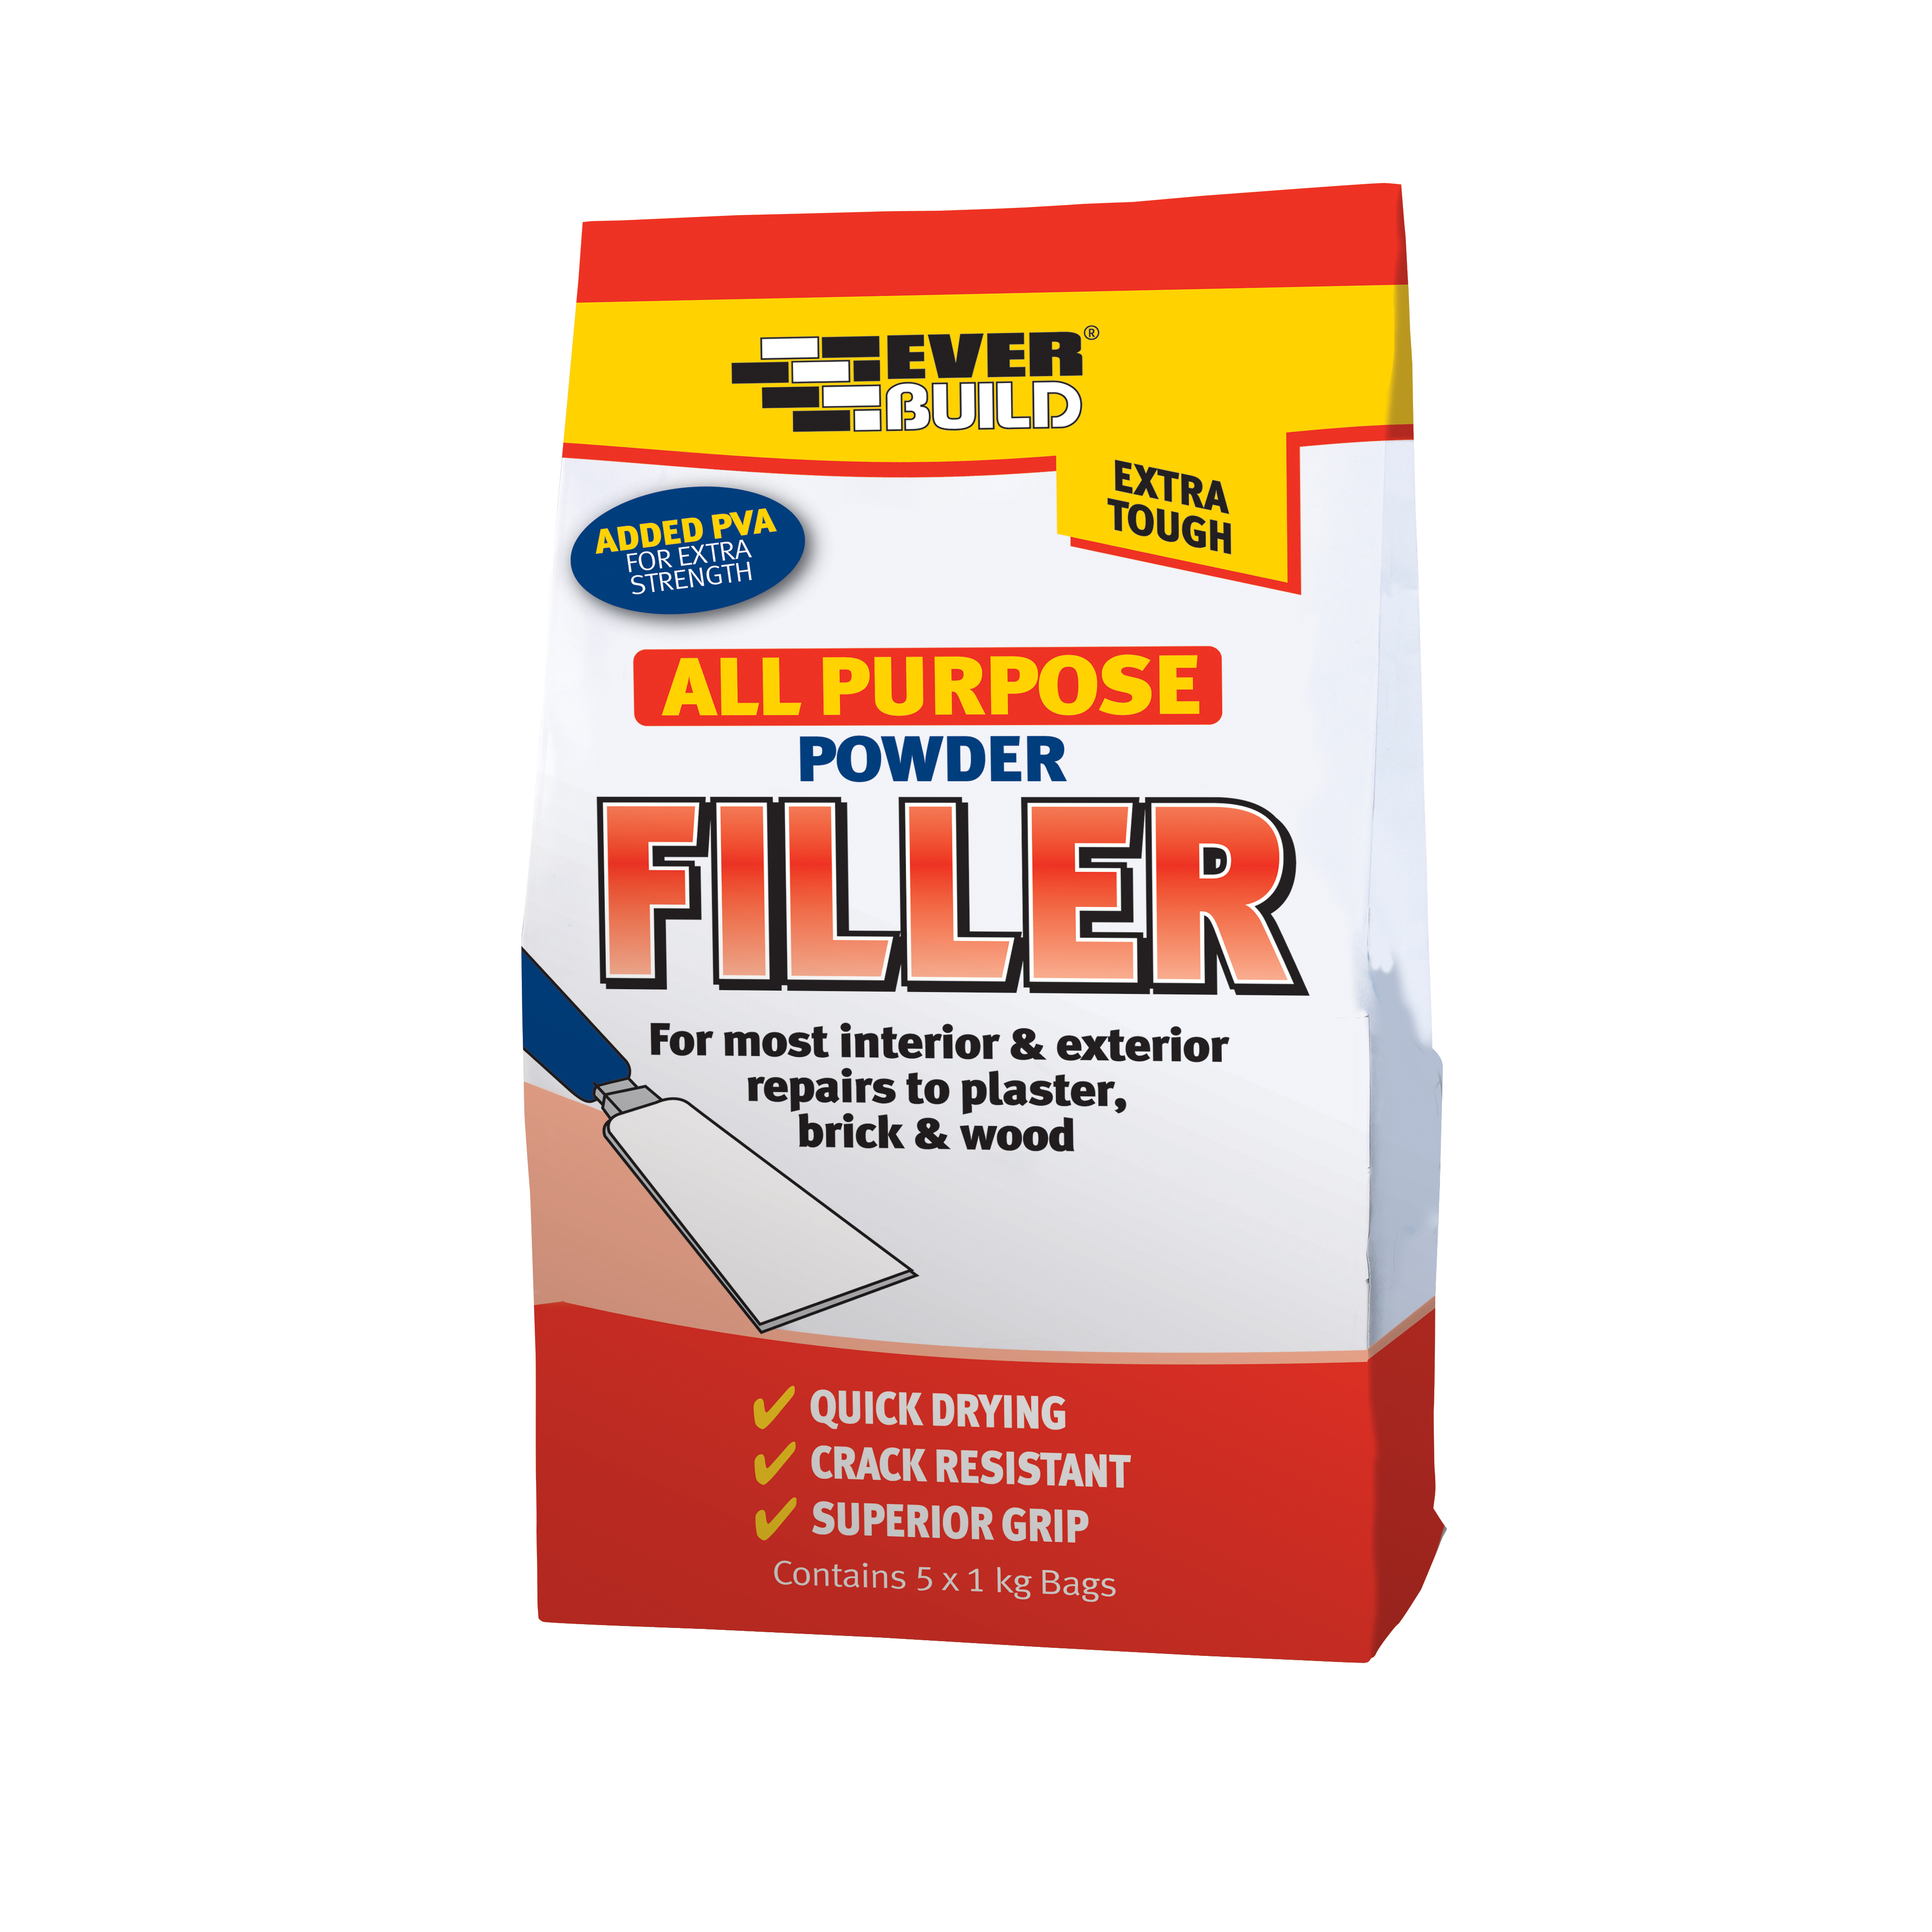 All Purpose Powder Filler - White